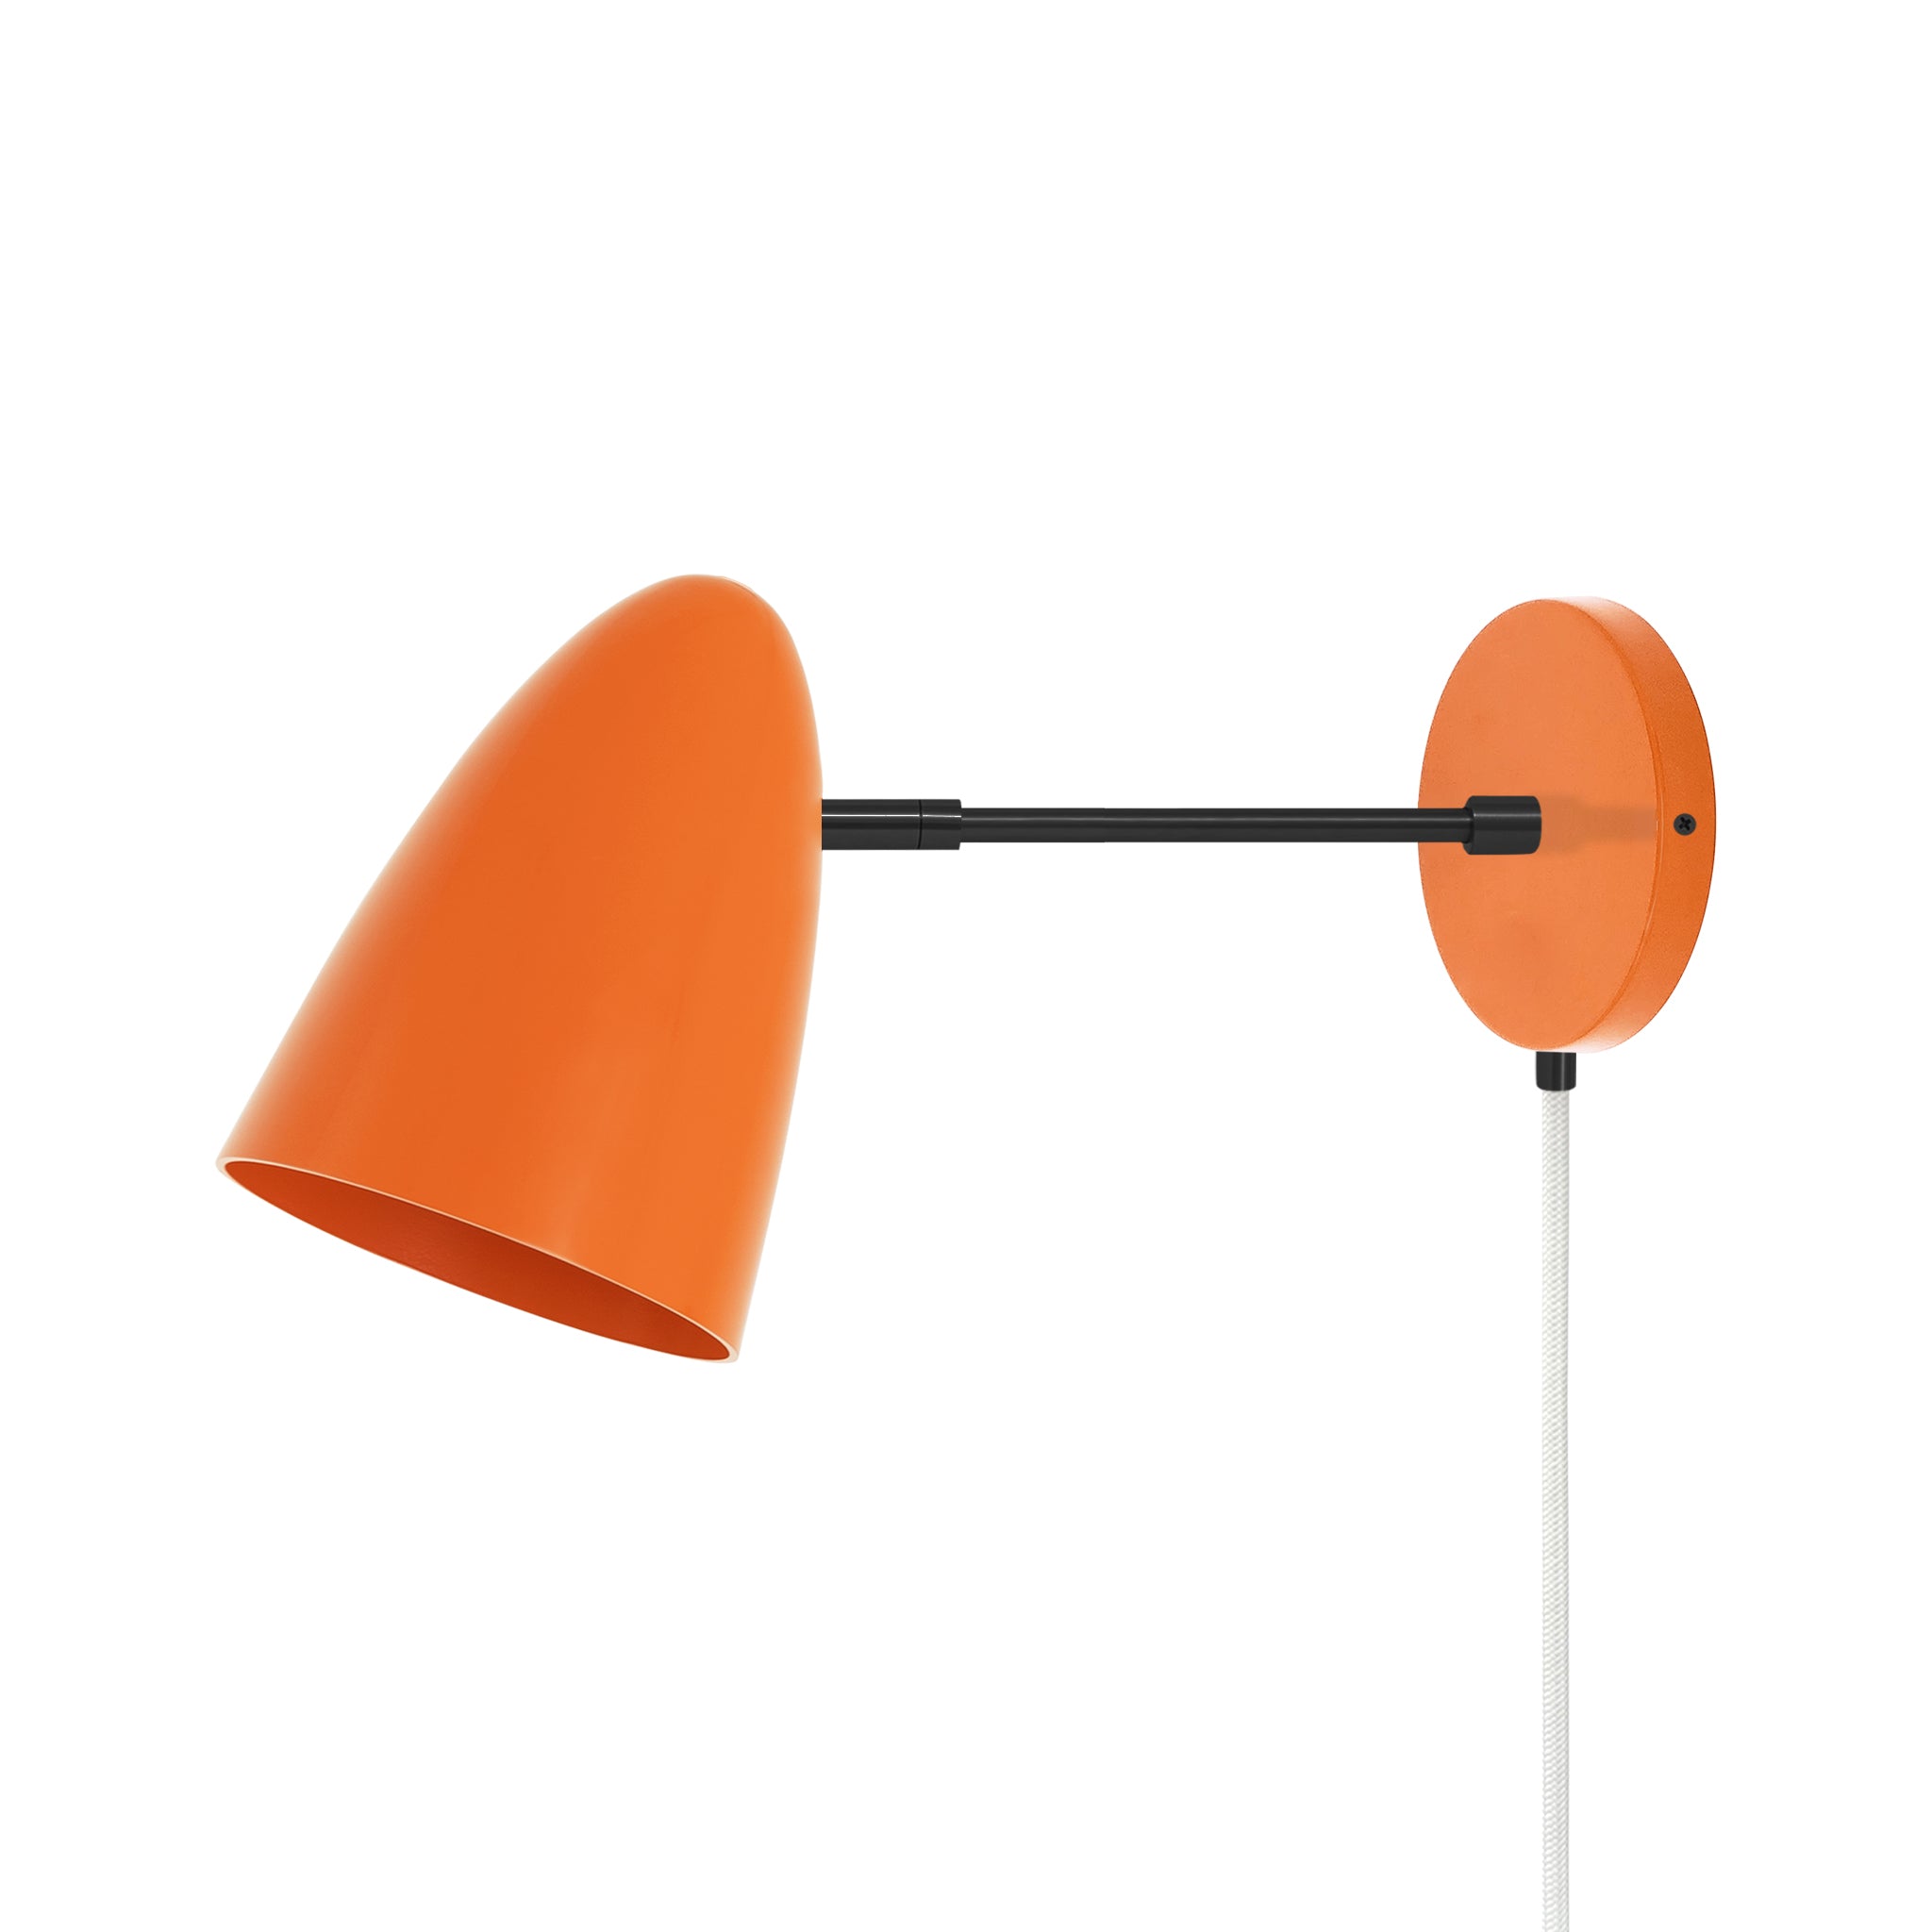 Black and orange color Boom plug-in sconce 6" arm Dutton Brown lighting